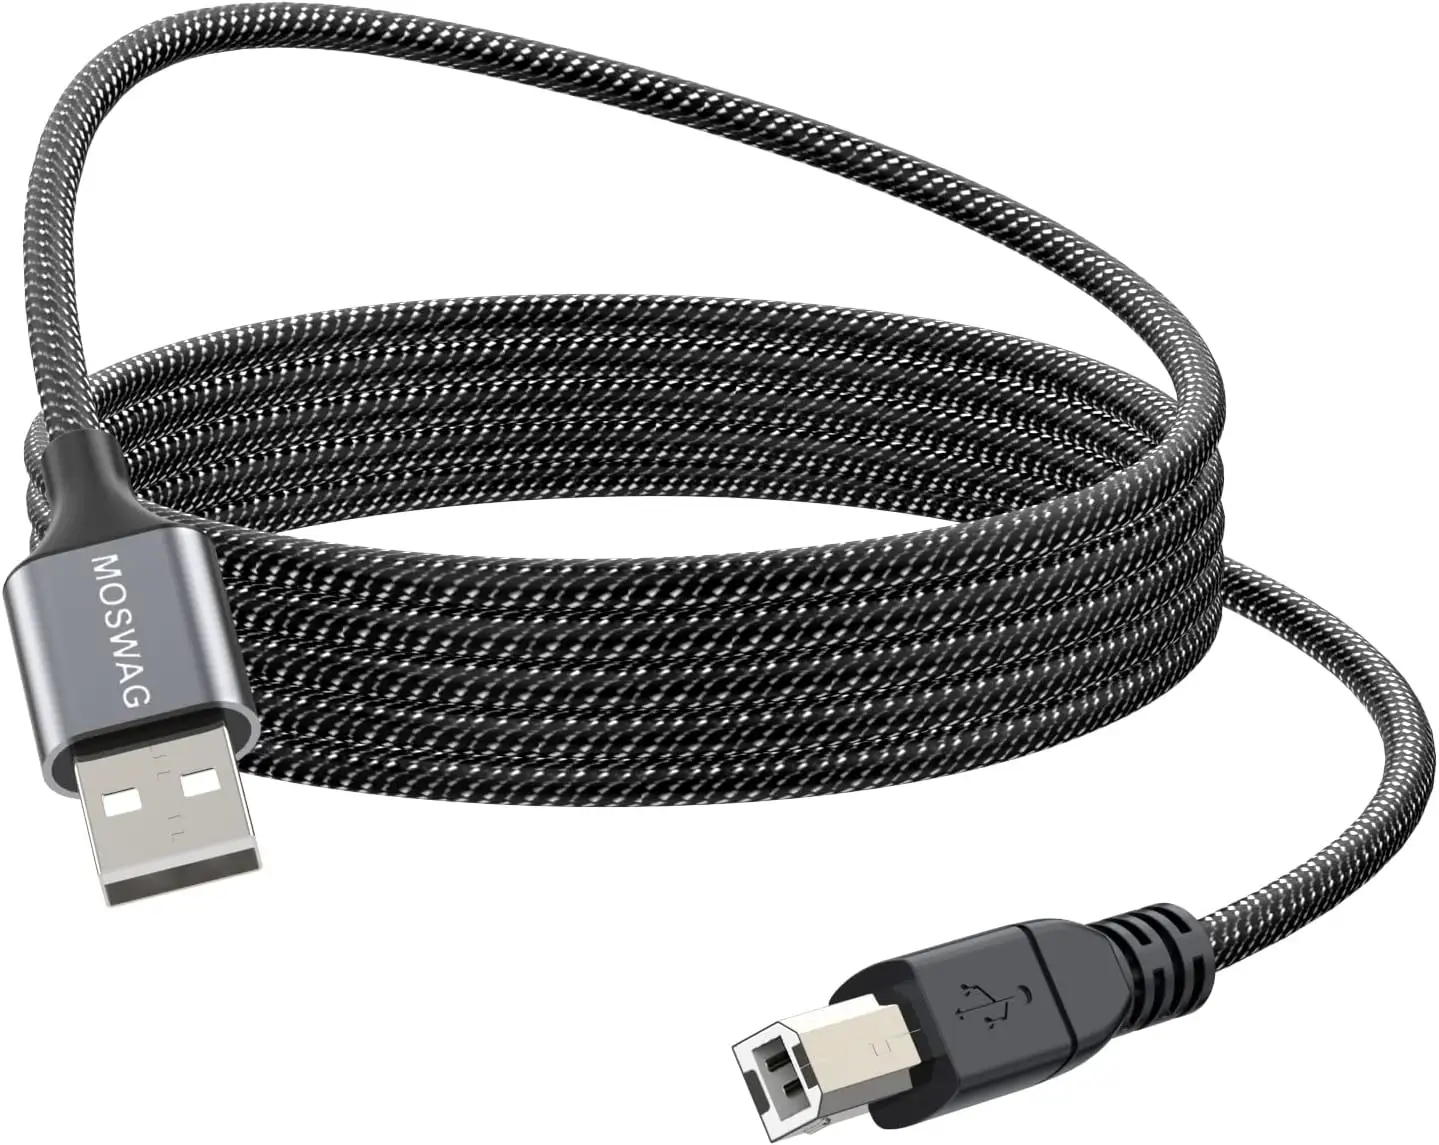 Câble d'imprimante Câble USB vers MIDI, câble USB MIDI Scanner de piano pour HP,Canon,Dell,Epson,Lexmark,Xerox,Brother,Samsung et plus encore